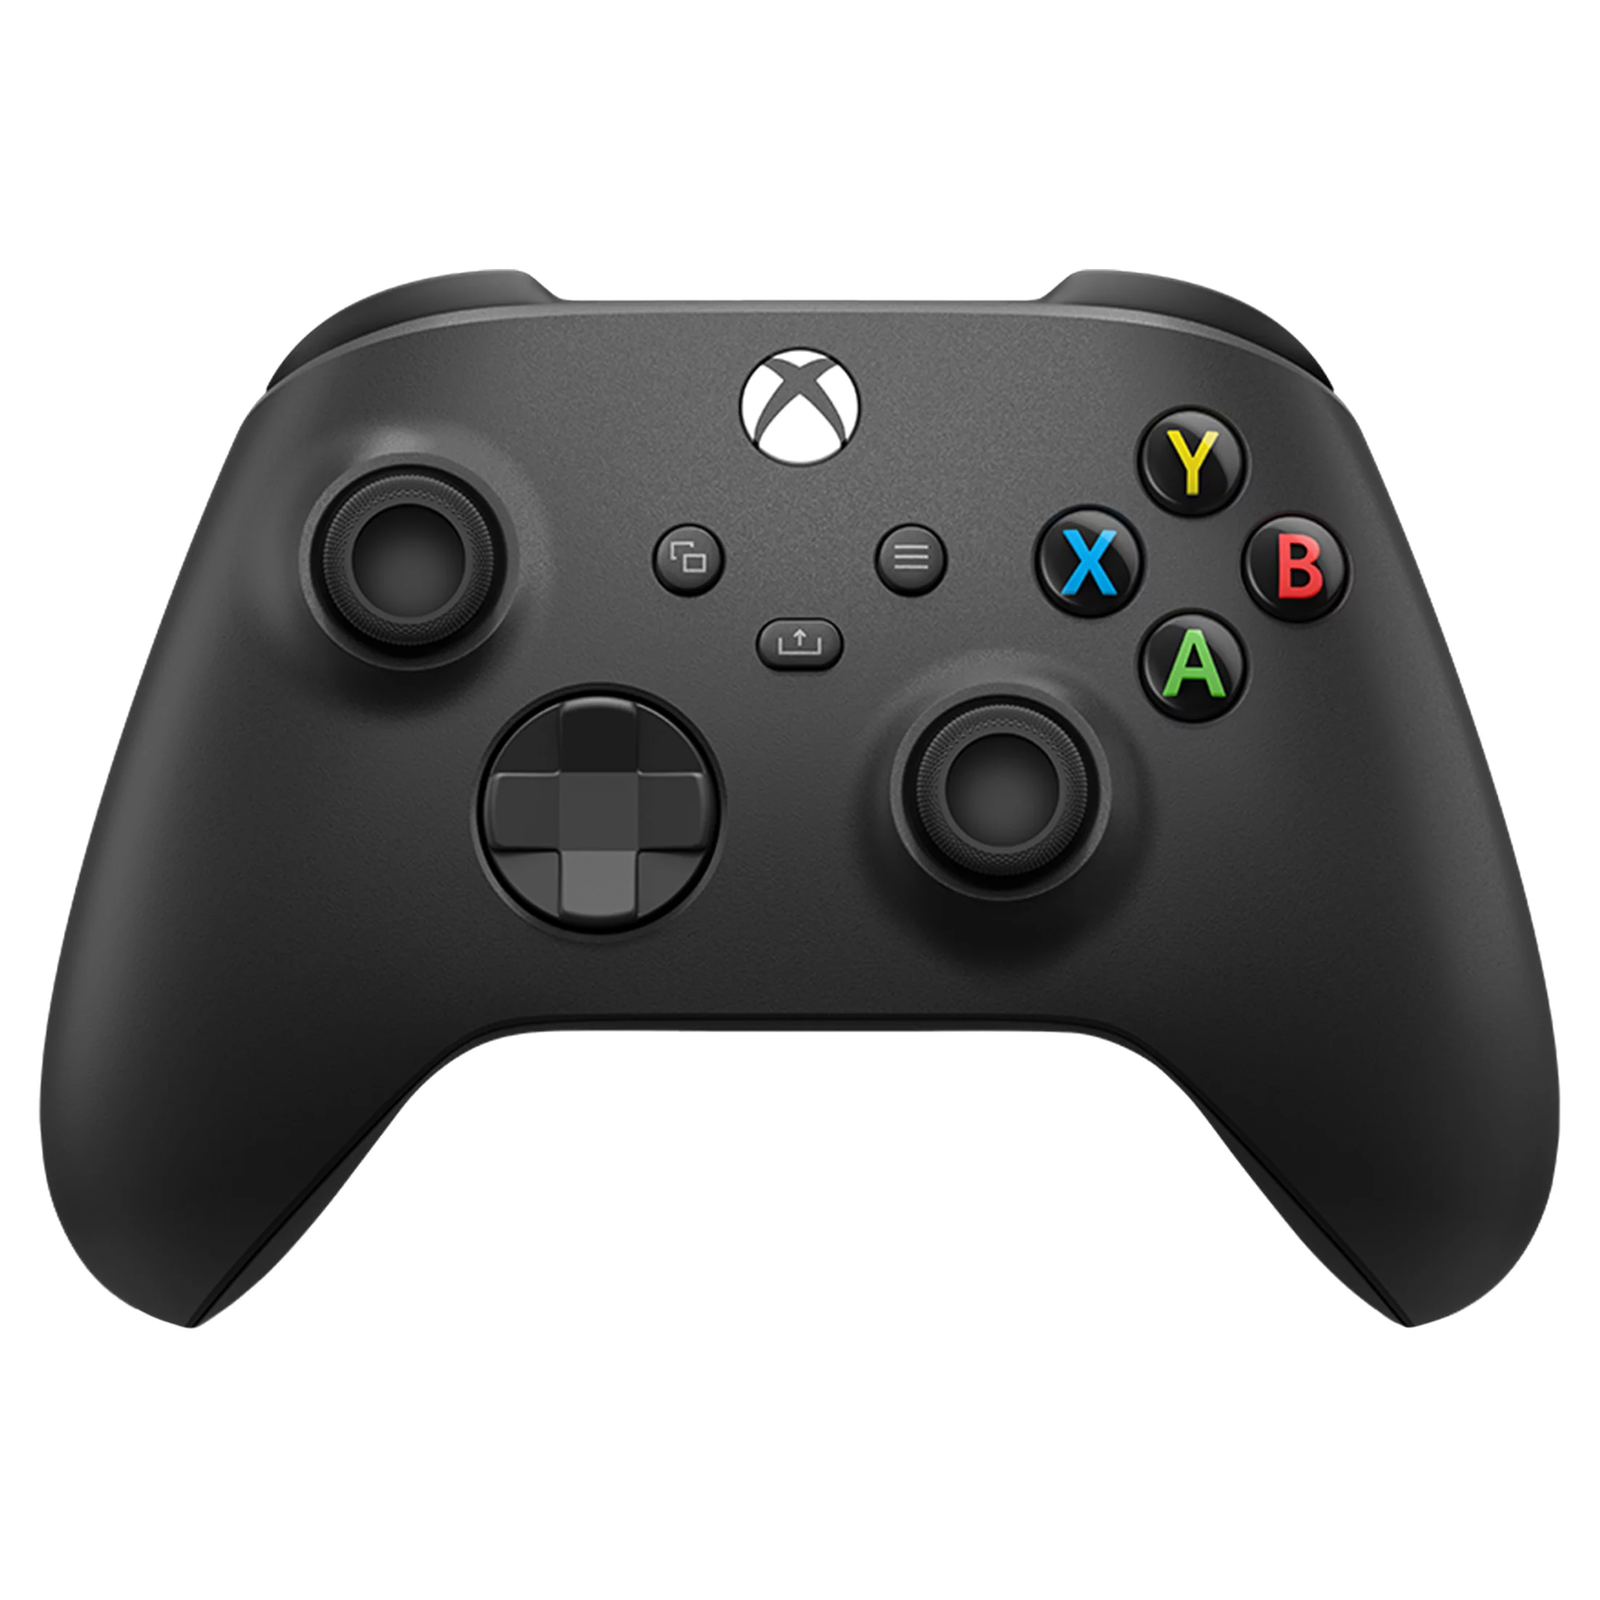 Microsoft QAT-00007 Xbox Wireless Controller - Carbon Black - $39